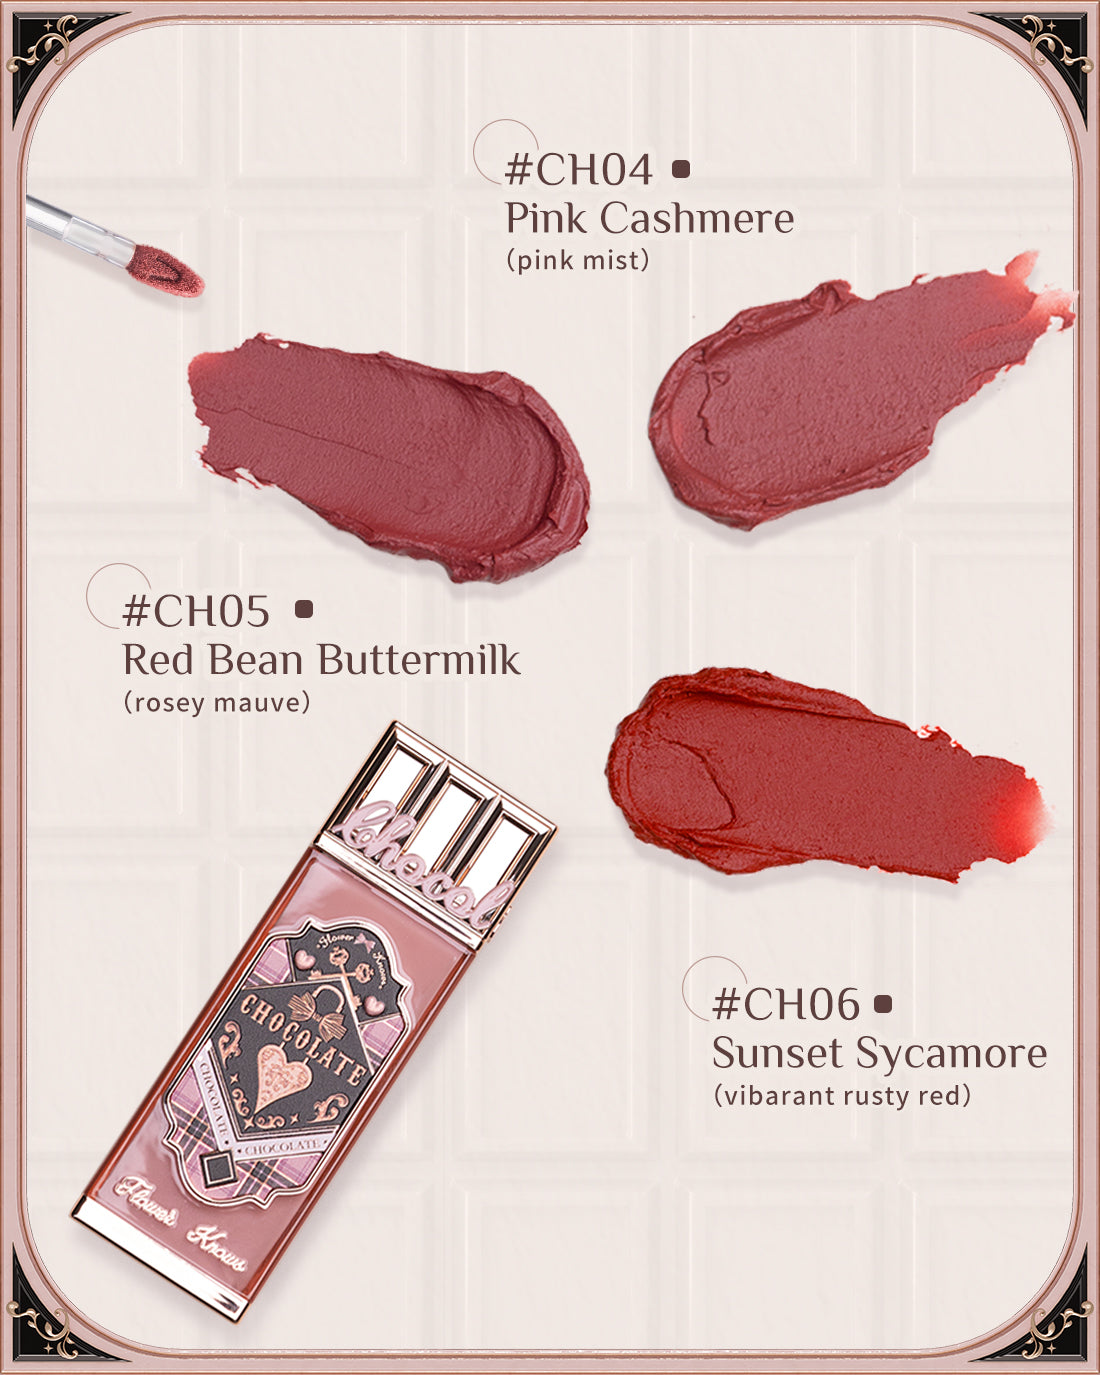 Chocolate Wonder-Shop Lip Cream Gift Set | Customize your own bundle